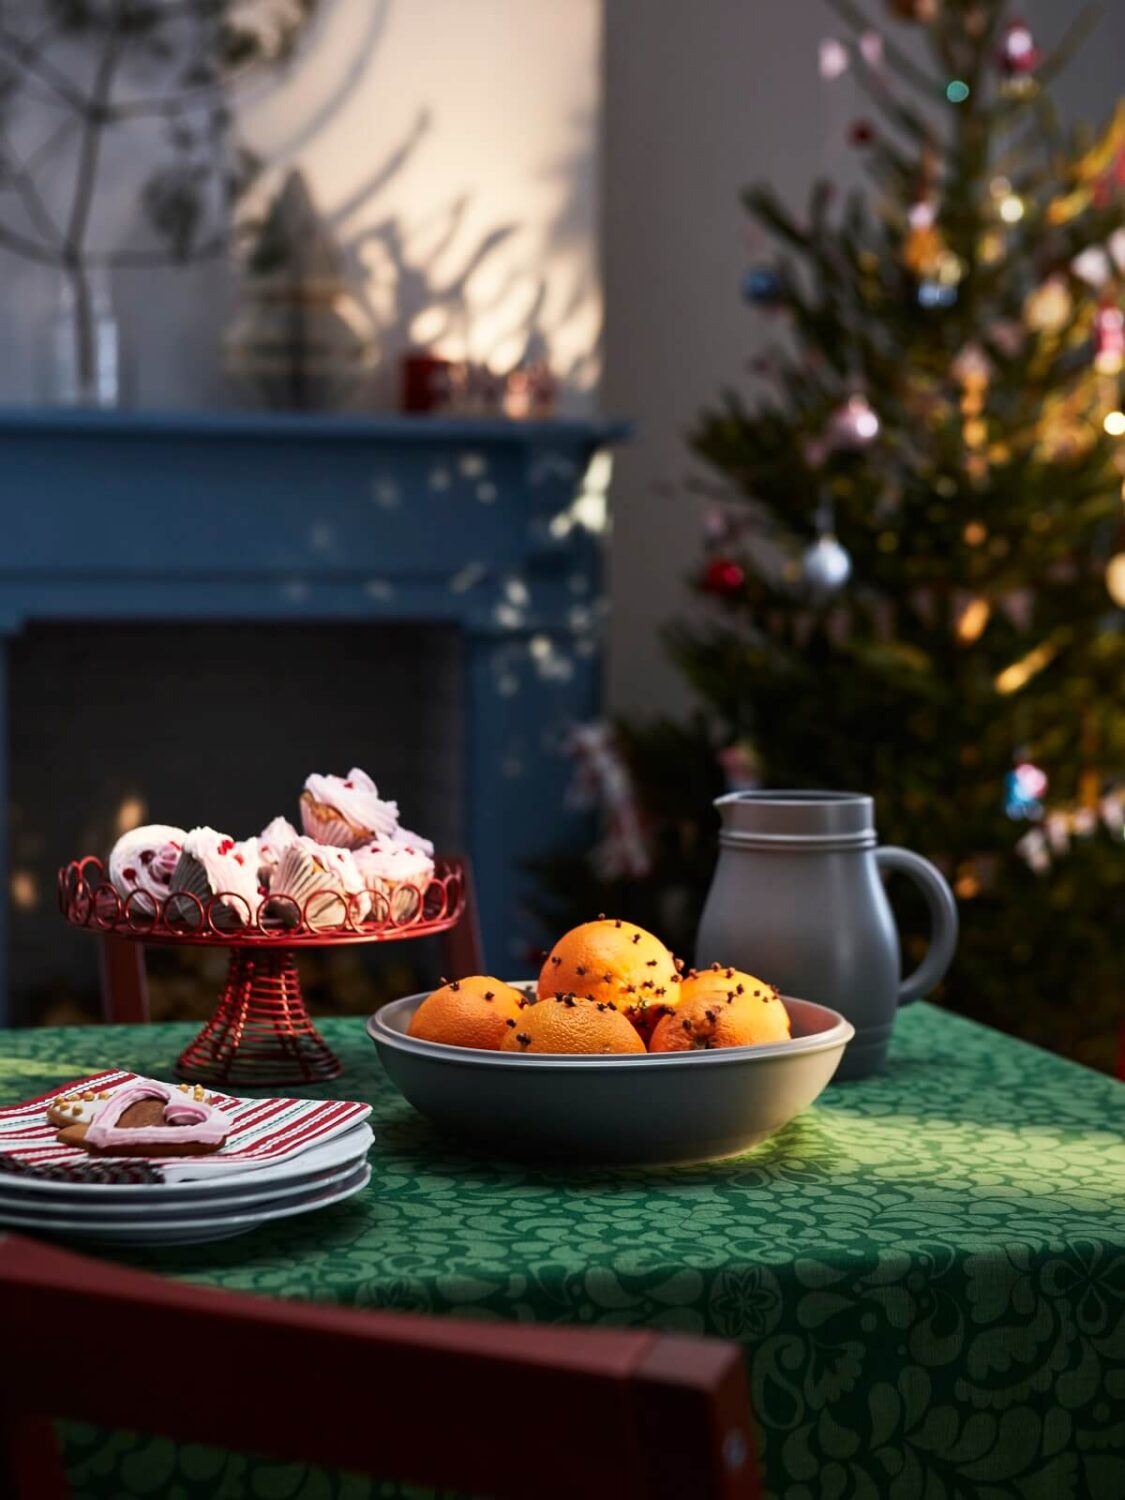 ikea-christmas-decorations-serving-platter-nordroom